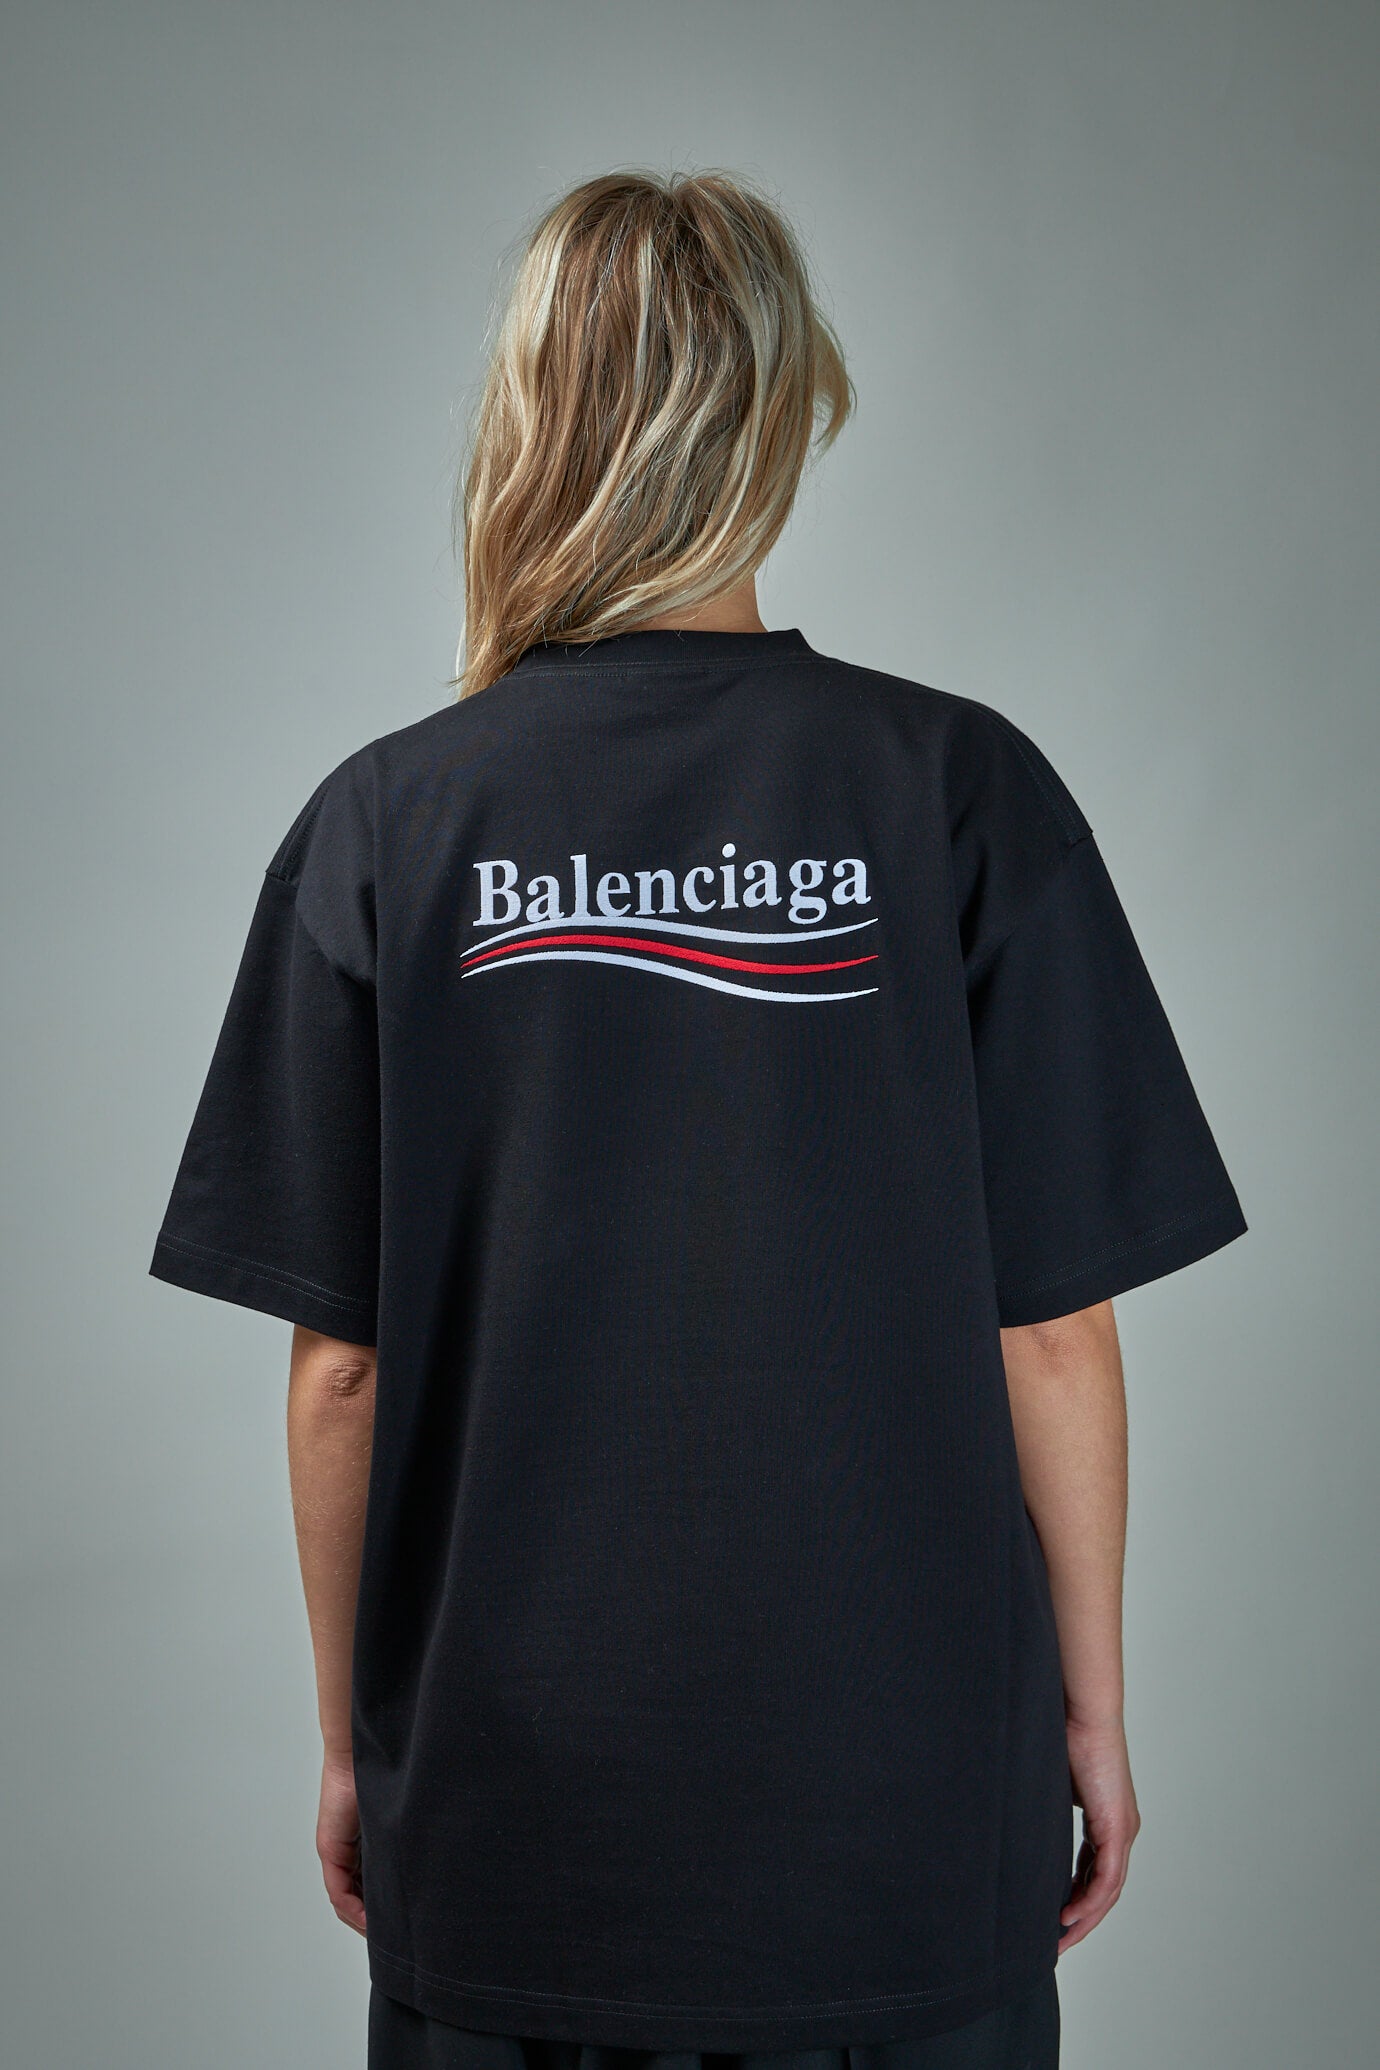 Balenciaga multi language longsleeves shirt  Cashonly